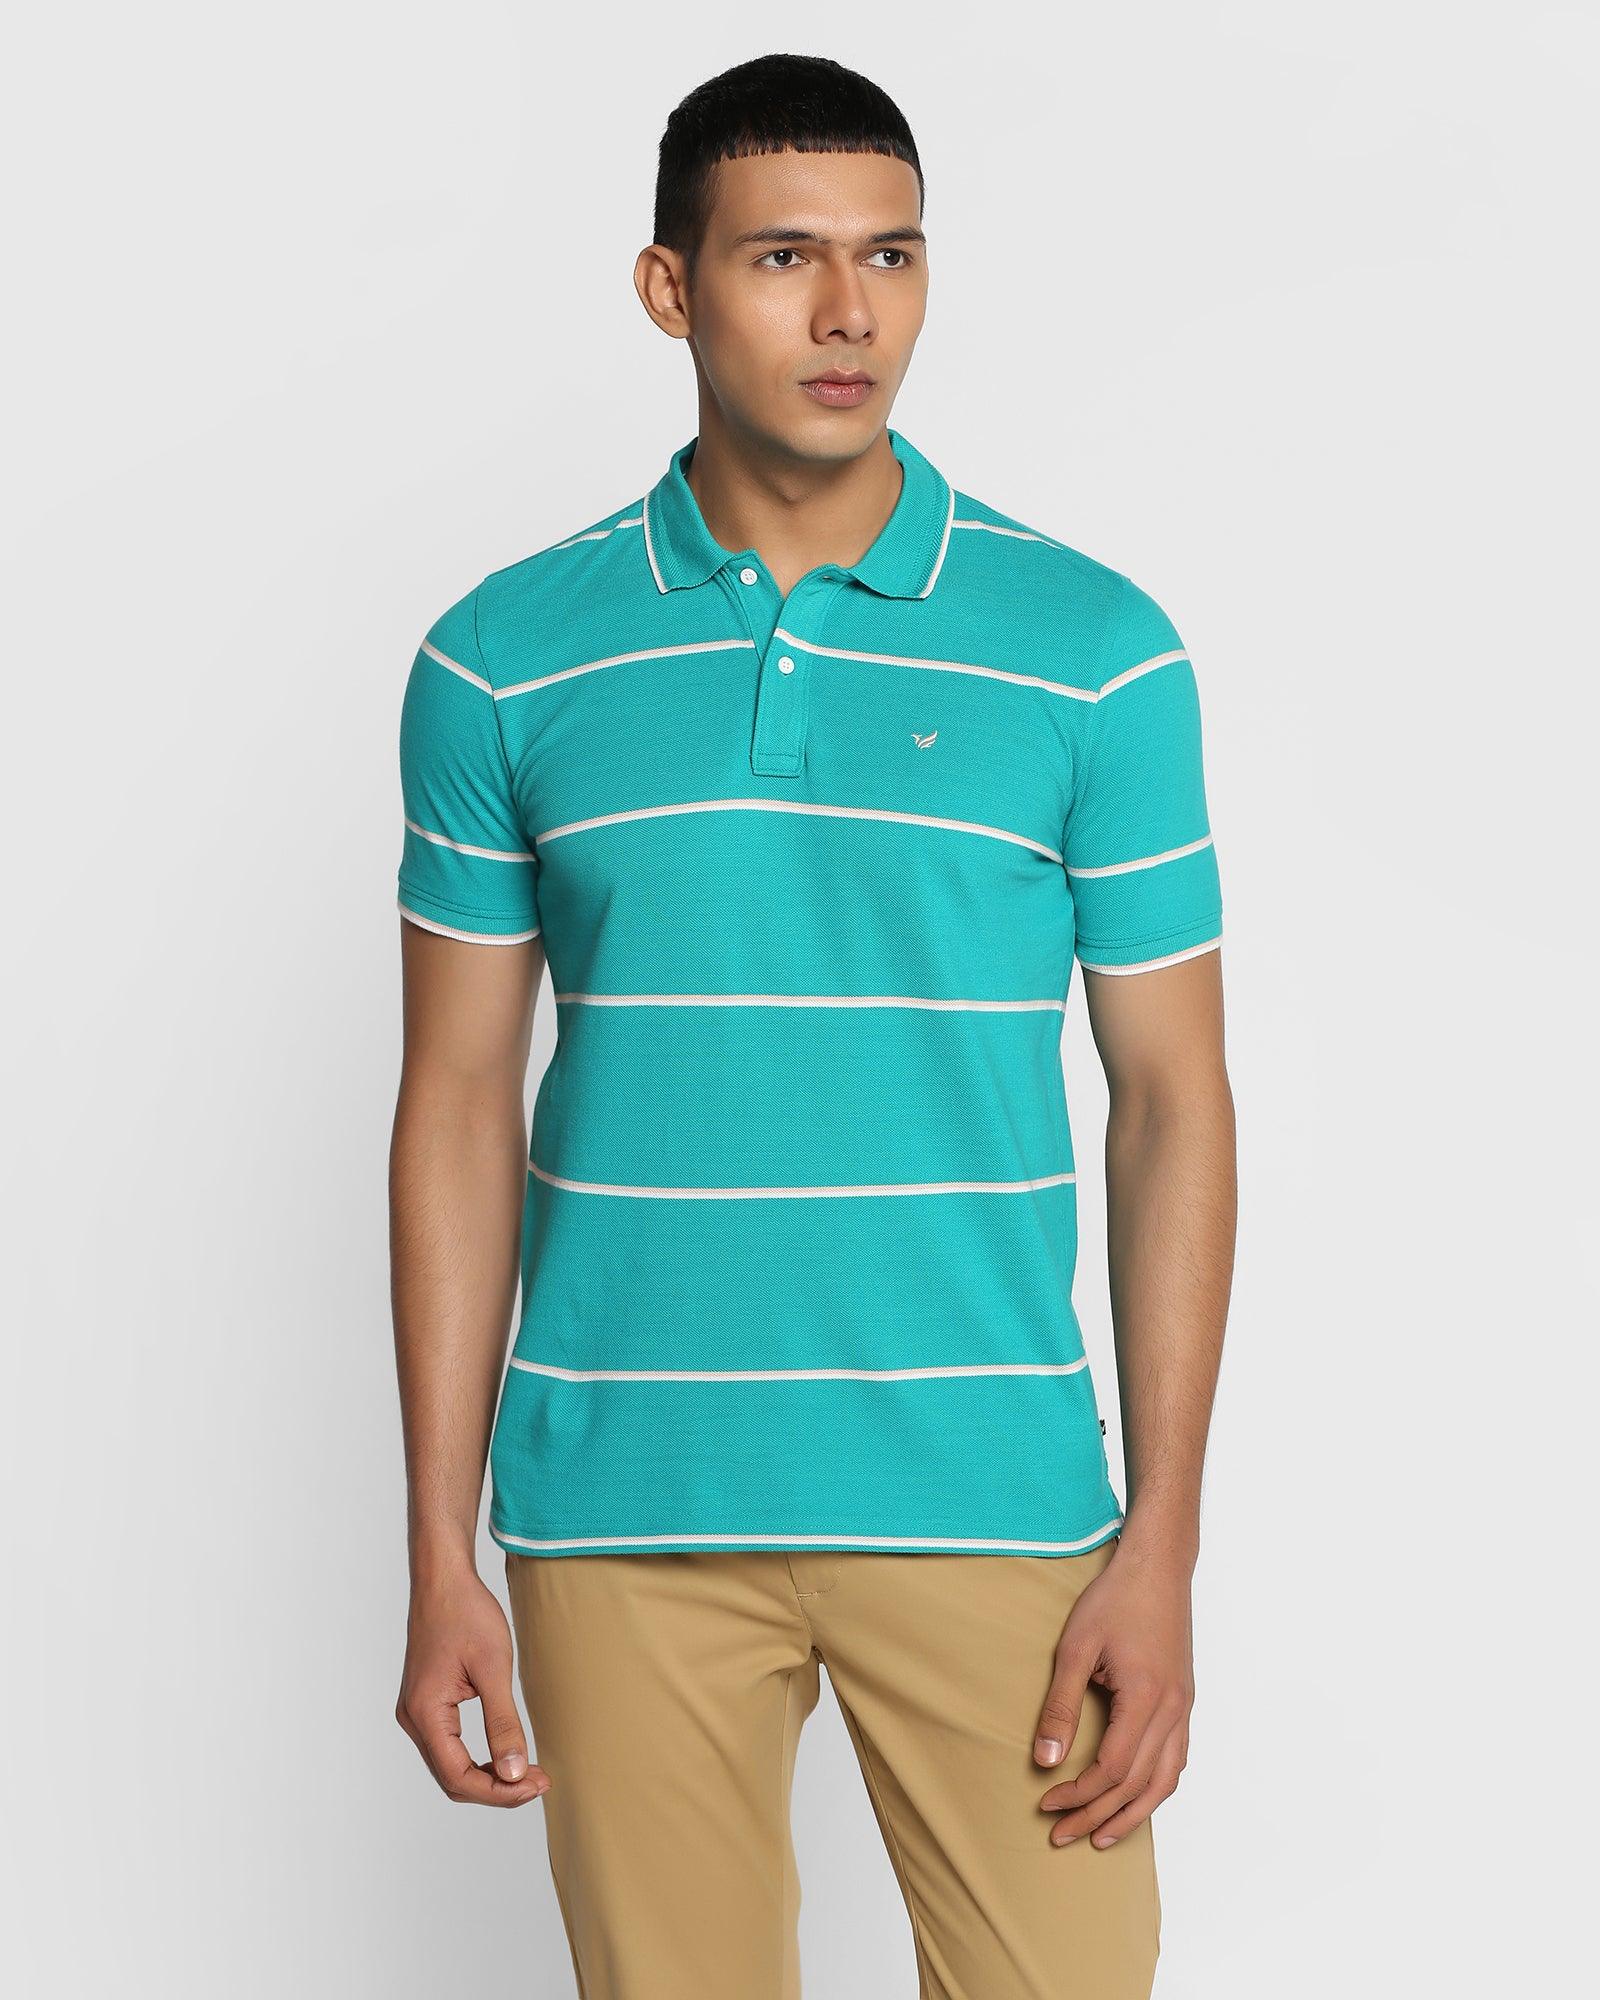 Polo Mint Green Striped T Shirt - Vertical